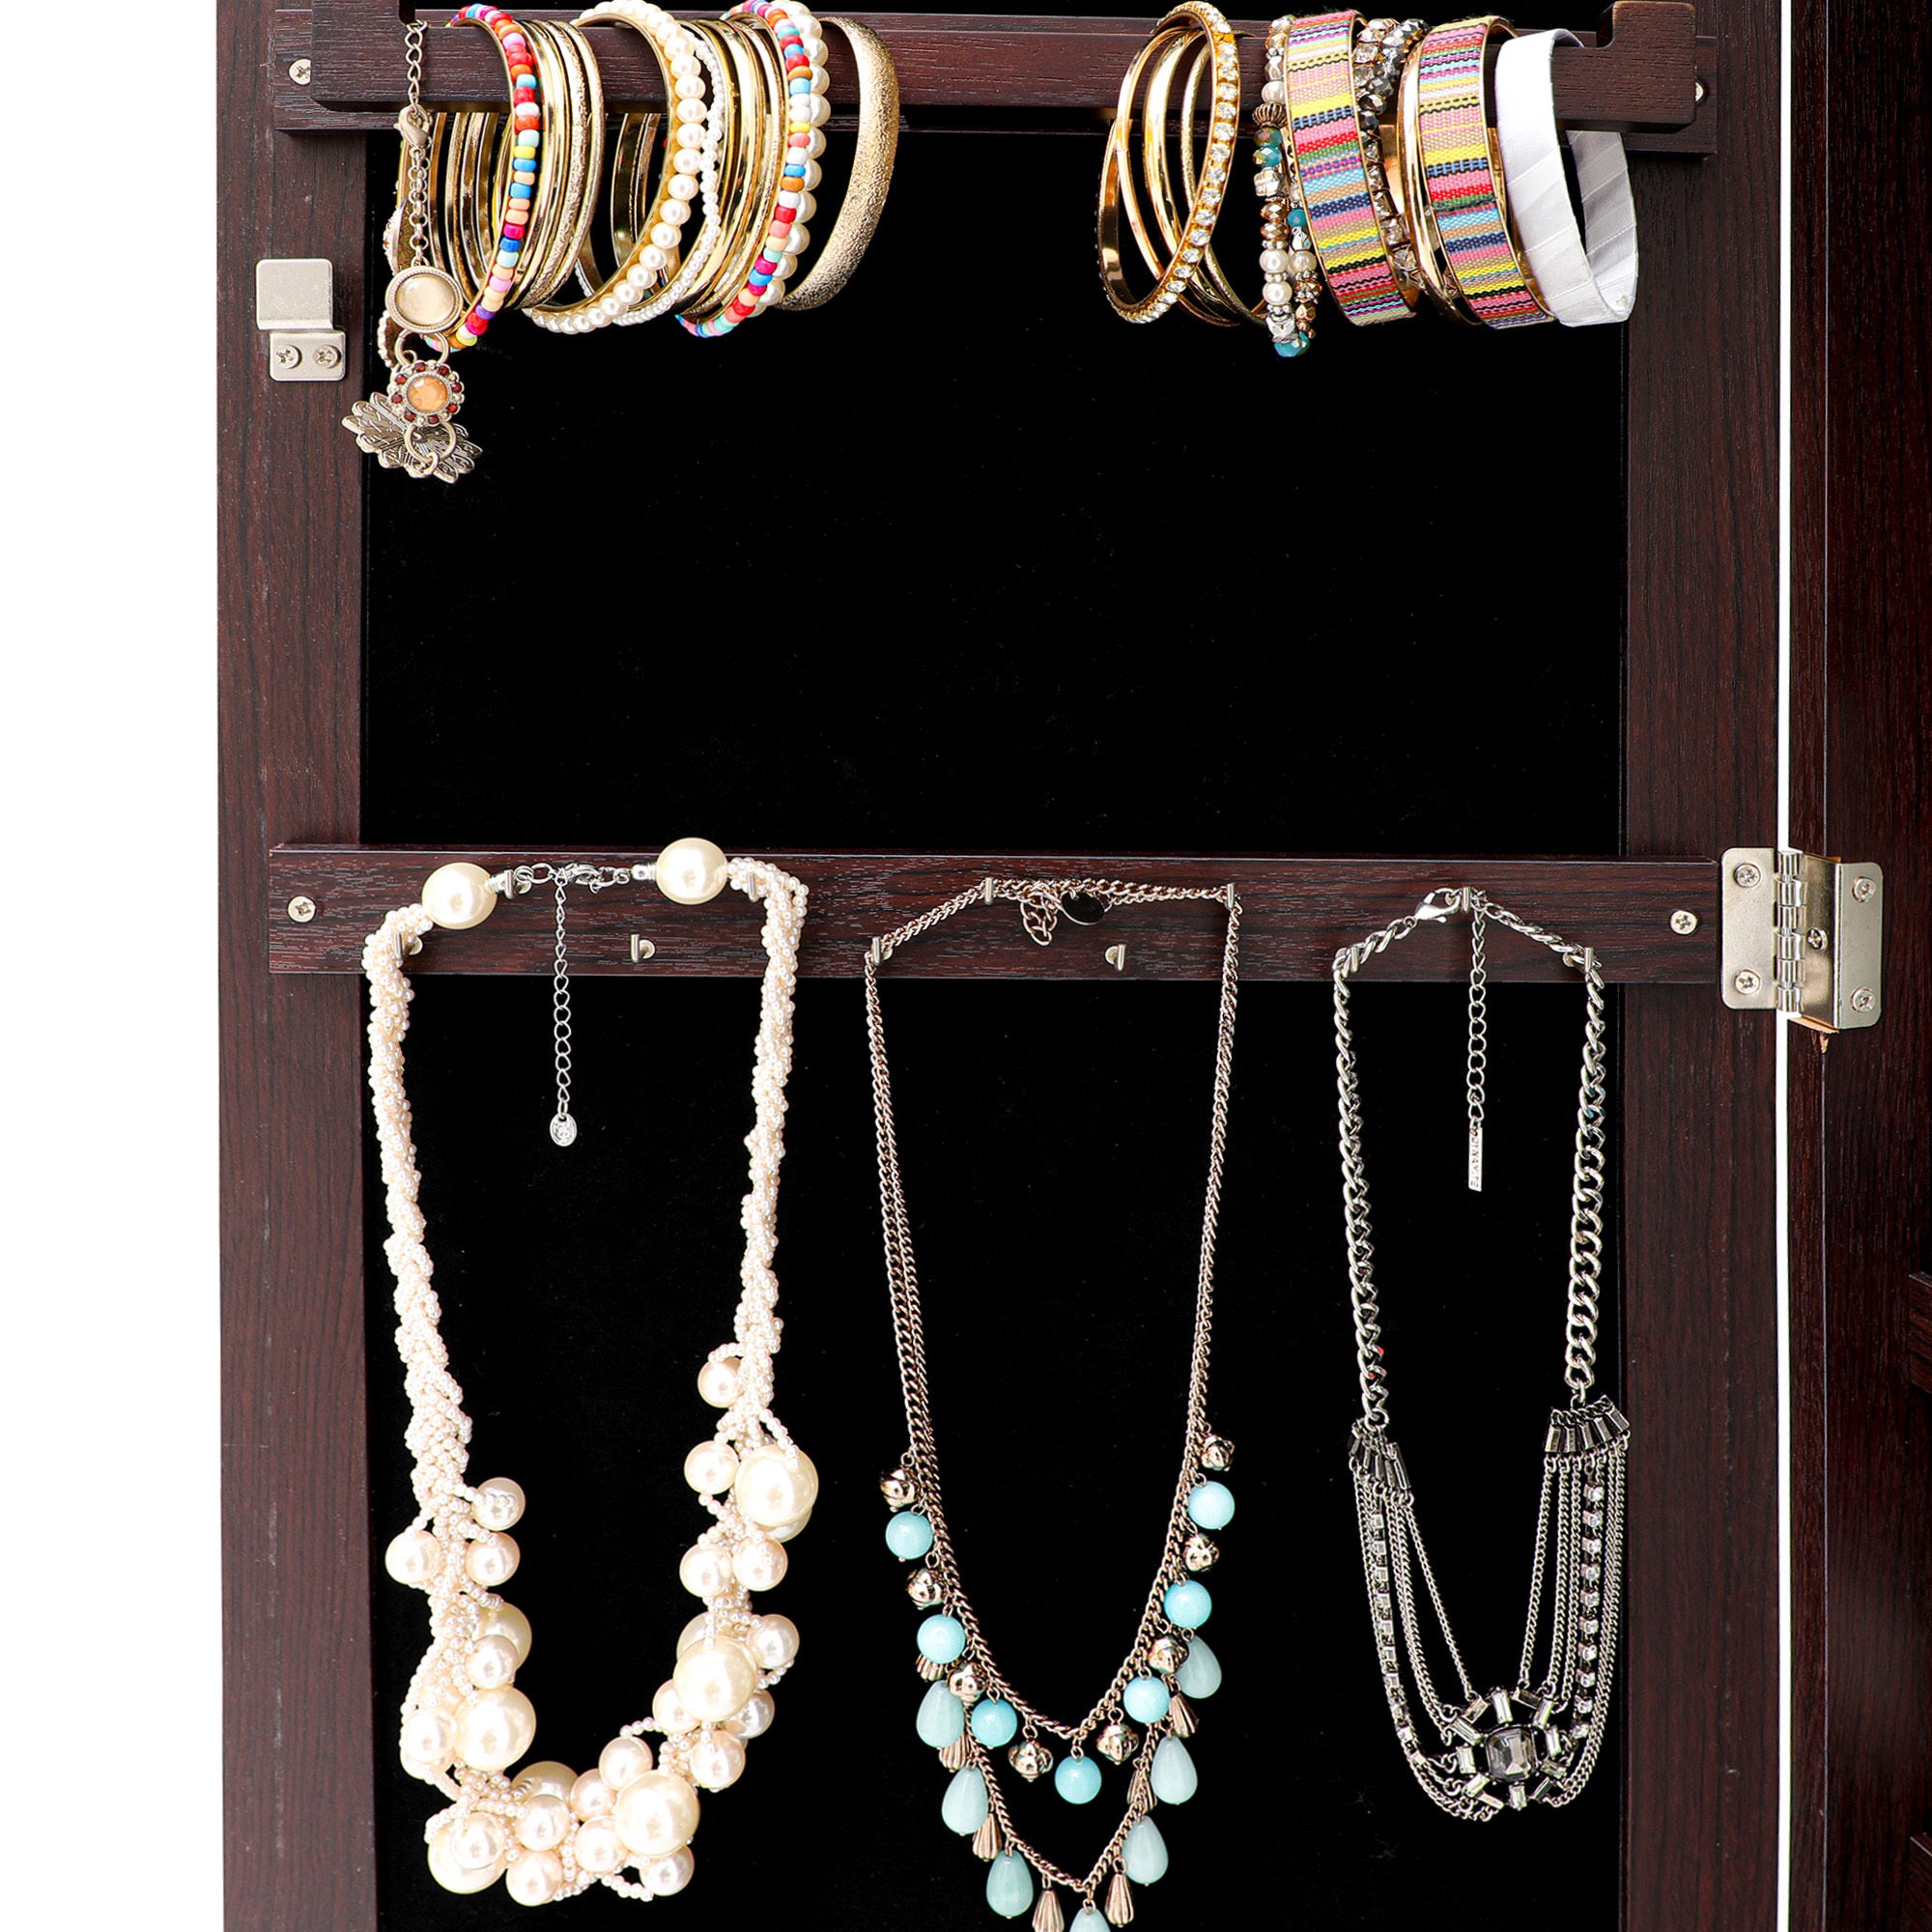 Fashion Simple Jewelry Storage Mirror Cabinet